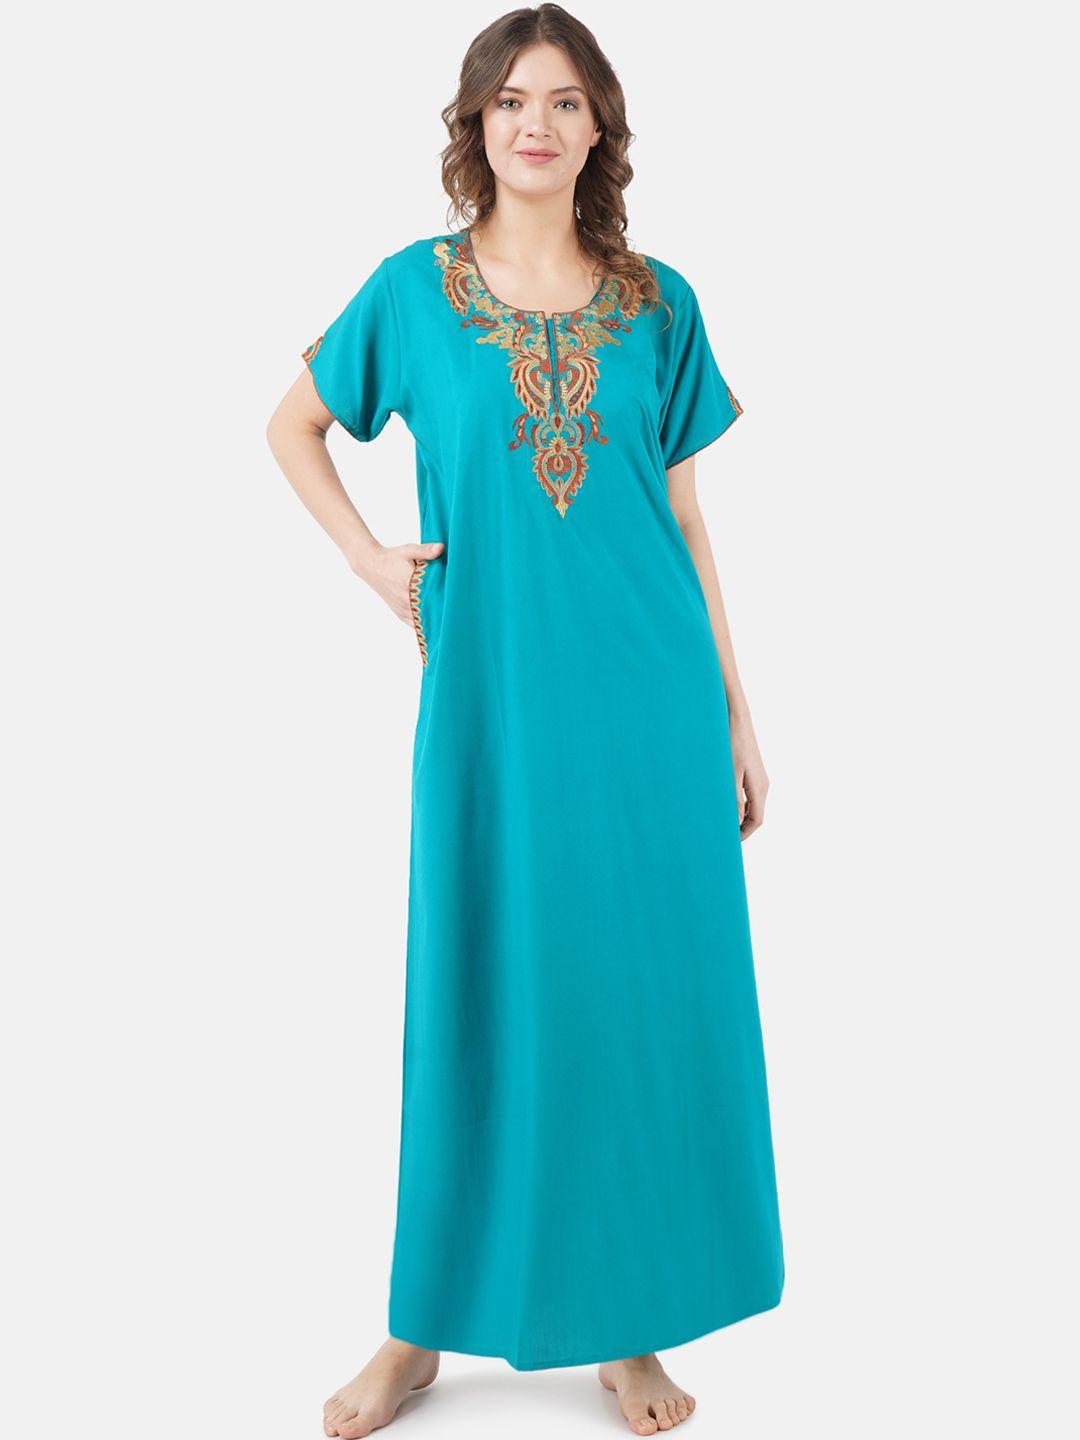 koi-sleepwear-turquoise-blue-lissybissy-cotton-embroidered-maxi-nightdress